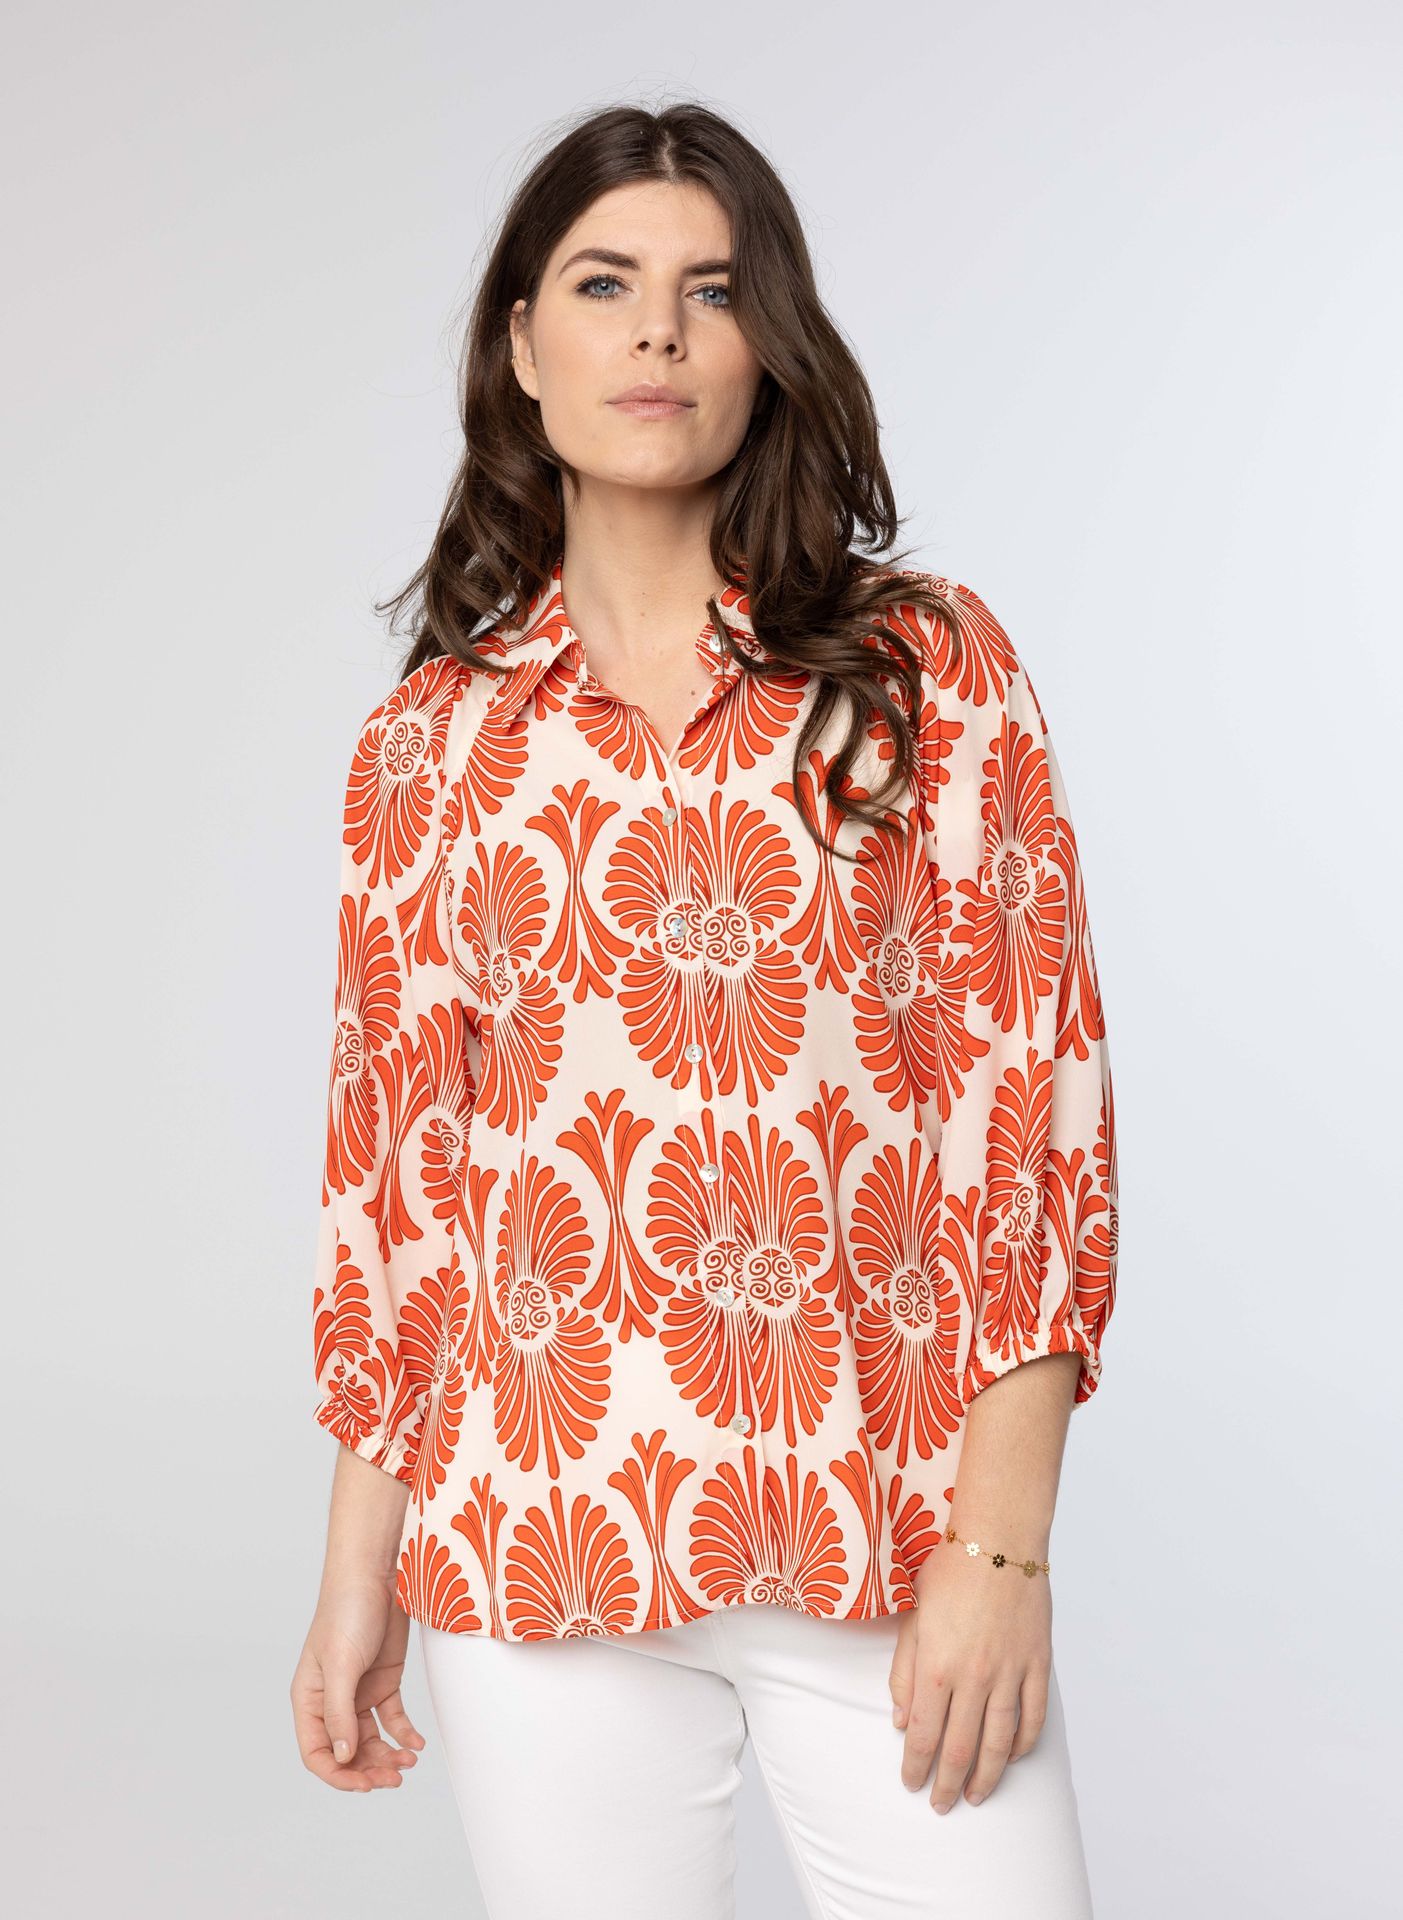 Norah Oranje blouse met print orange/ecru 213948-741